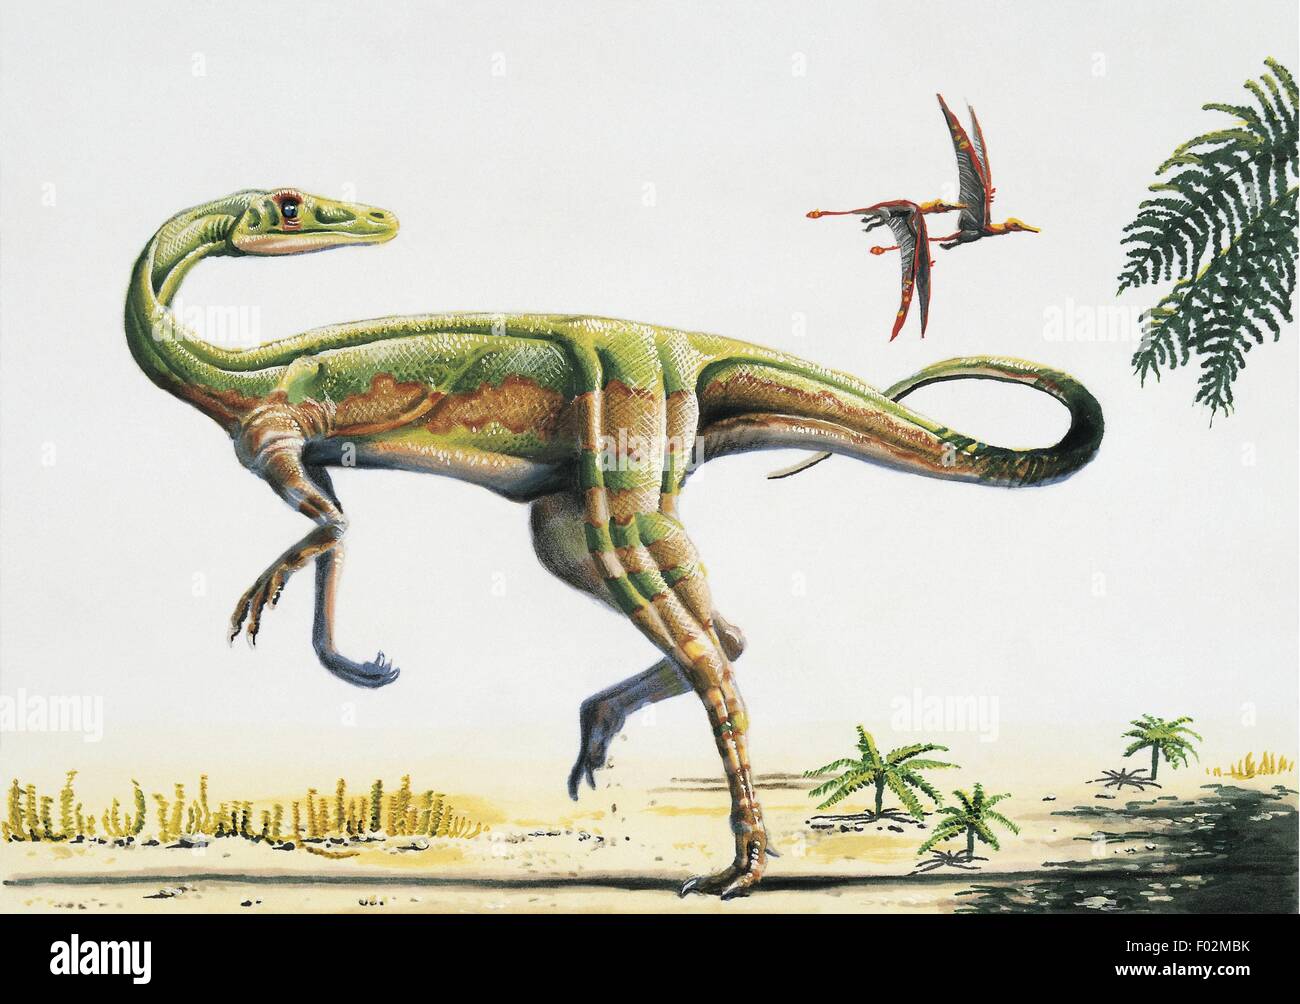 Dinosaurios no avianos fotografías e imágenes de alta resolución - Alamy